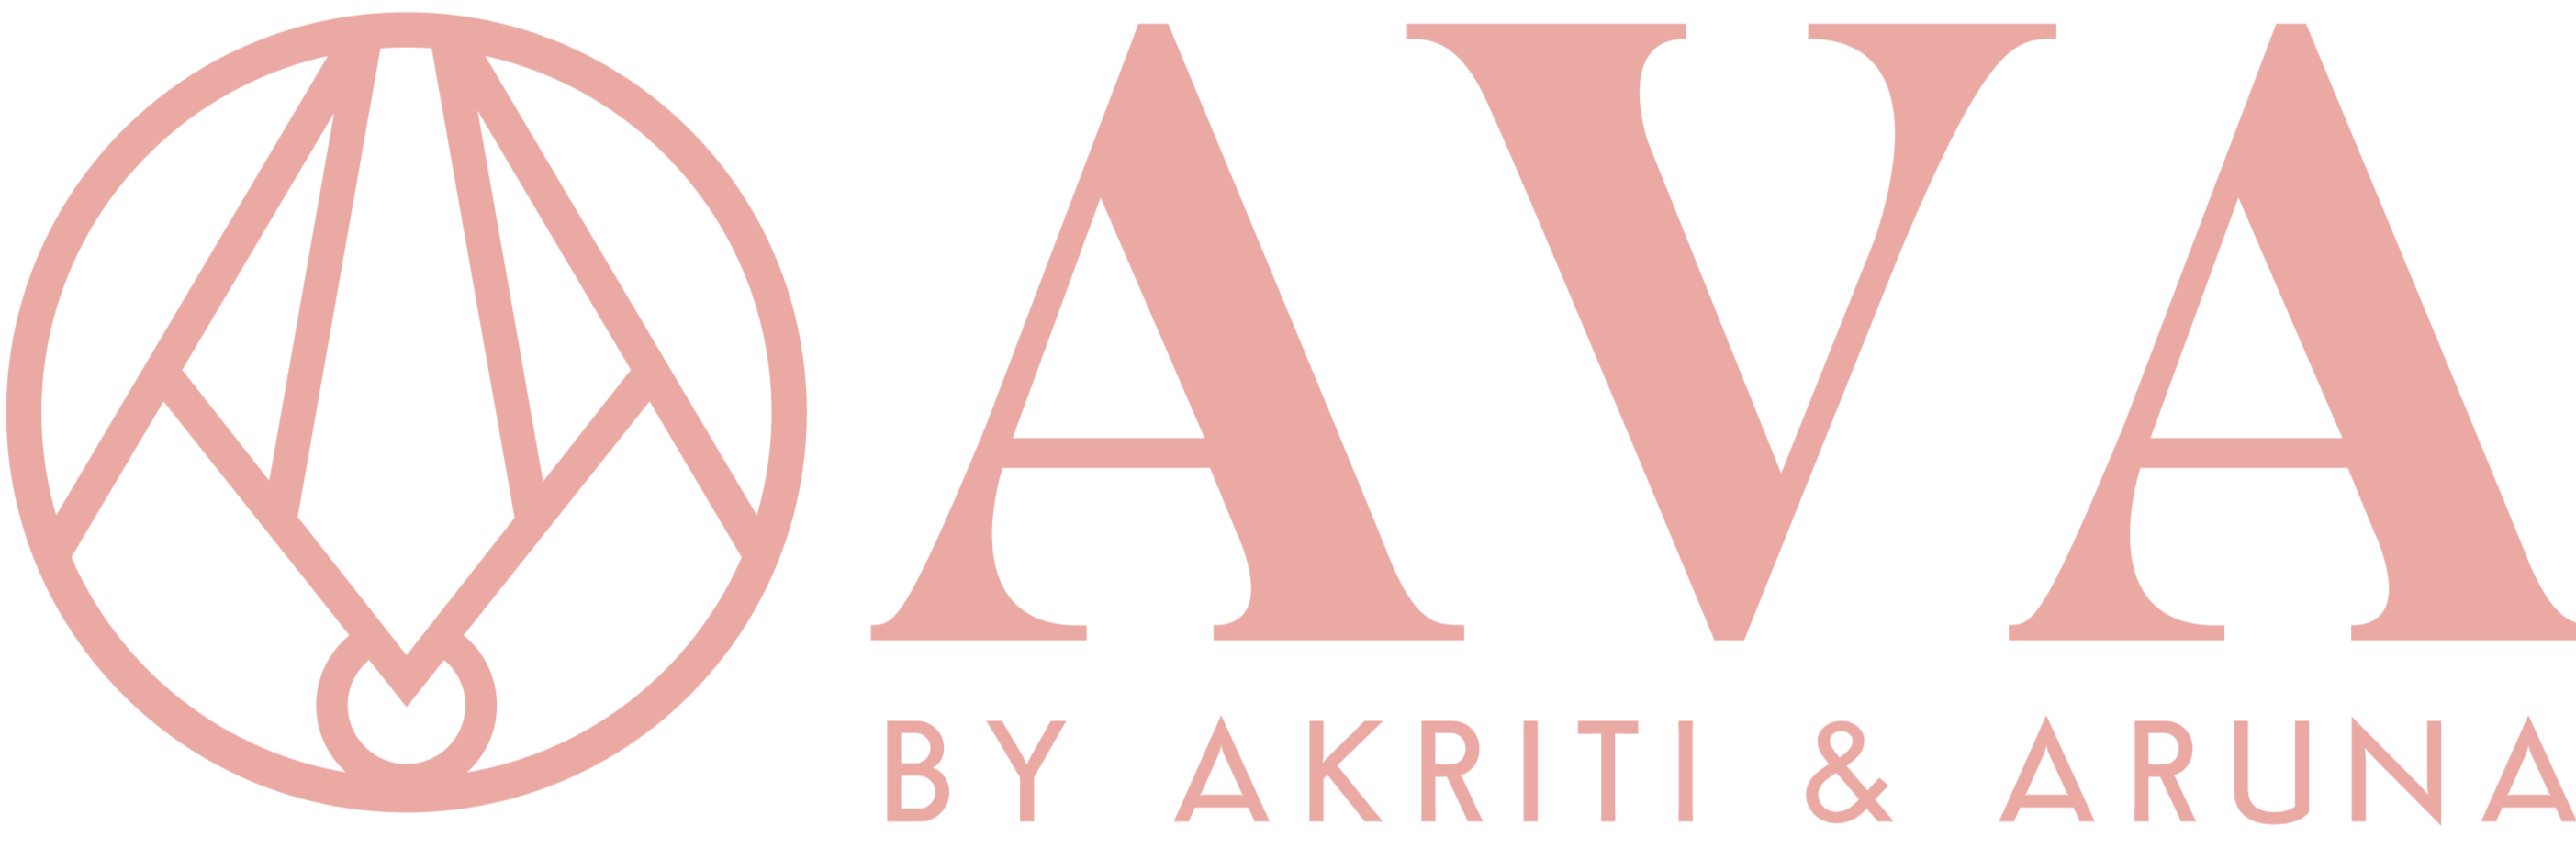 AVA BY AKRITI & ARUNA